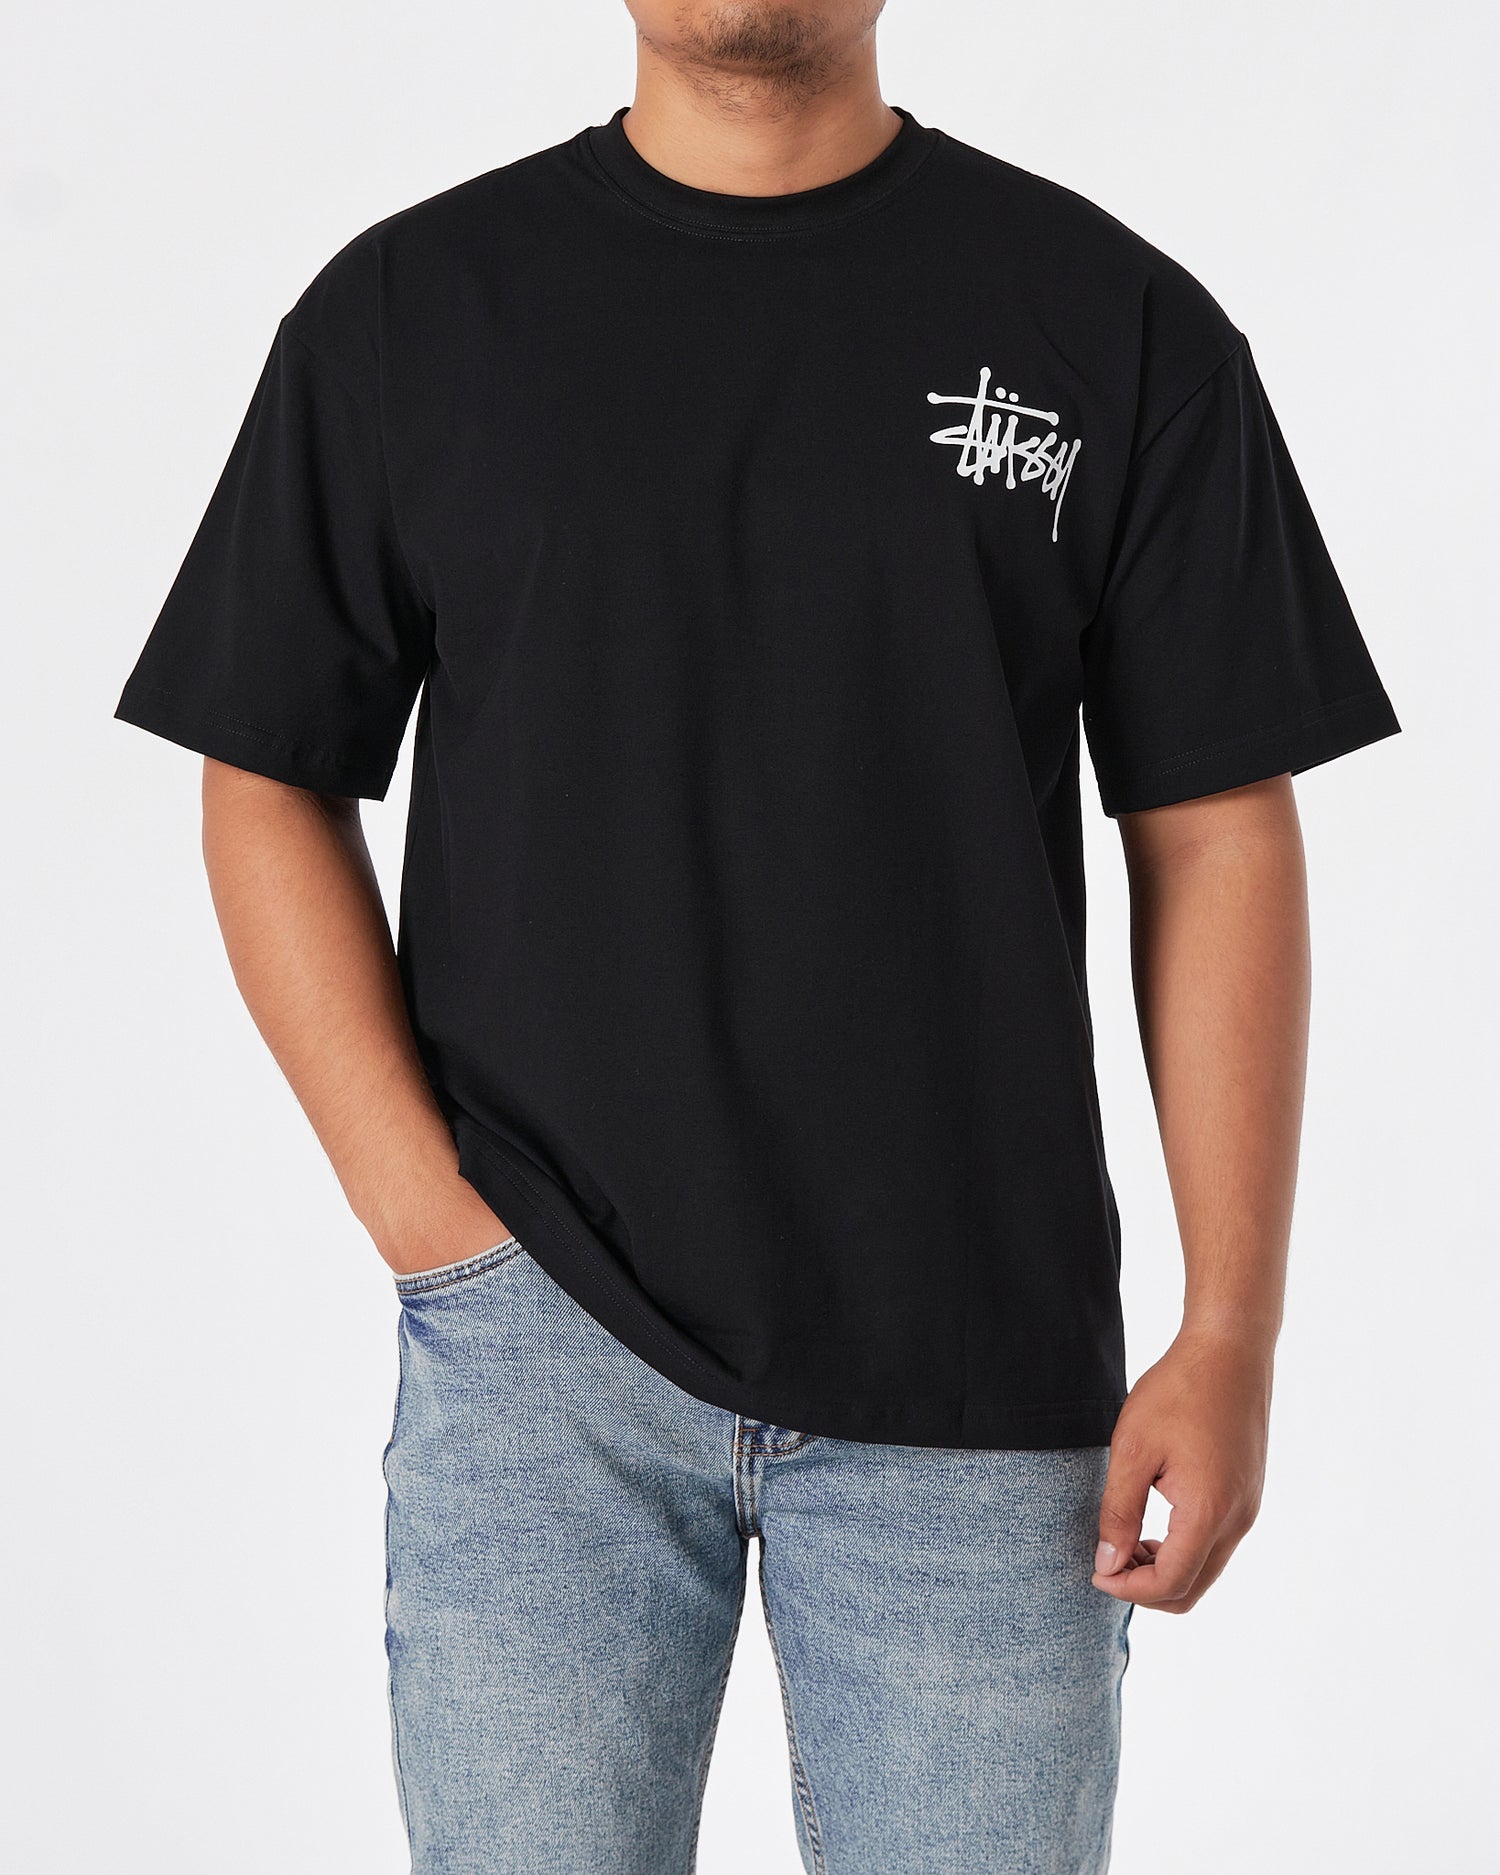 STU Front Back Logo Printed Men Black T-Shirt 20.90